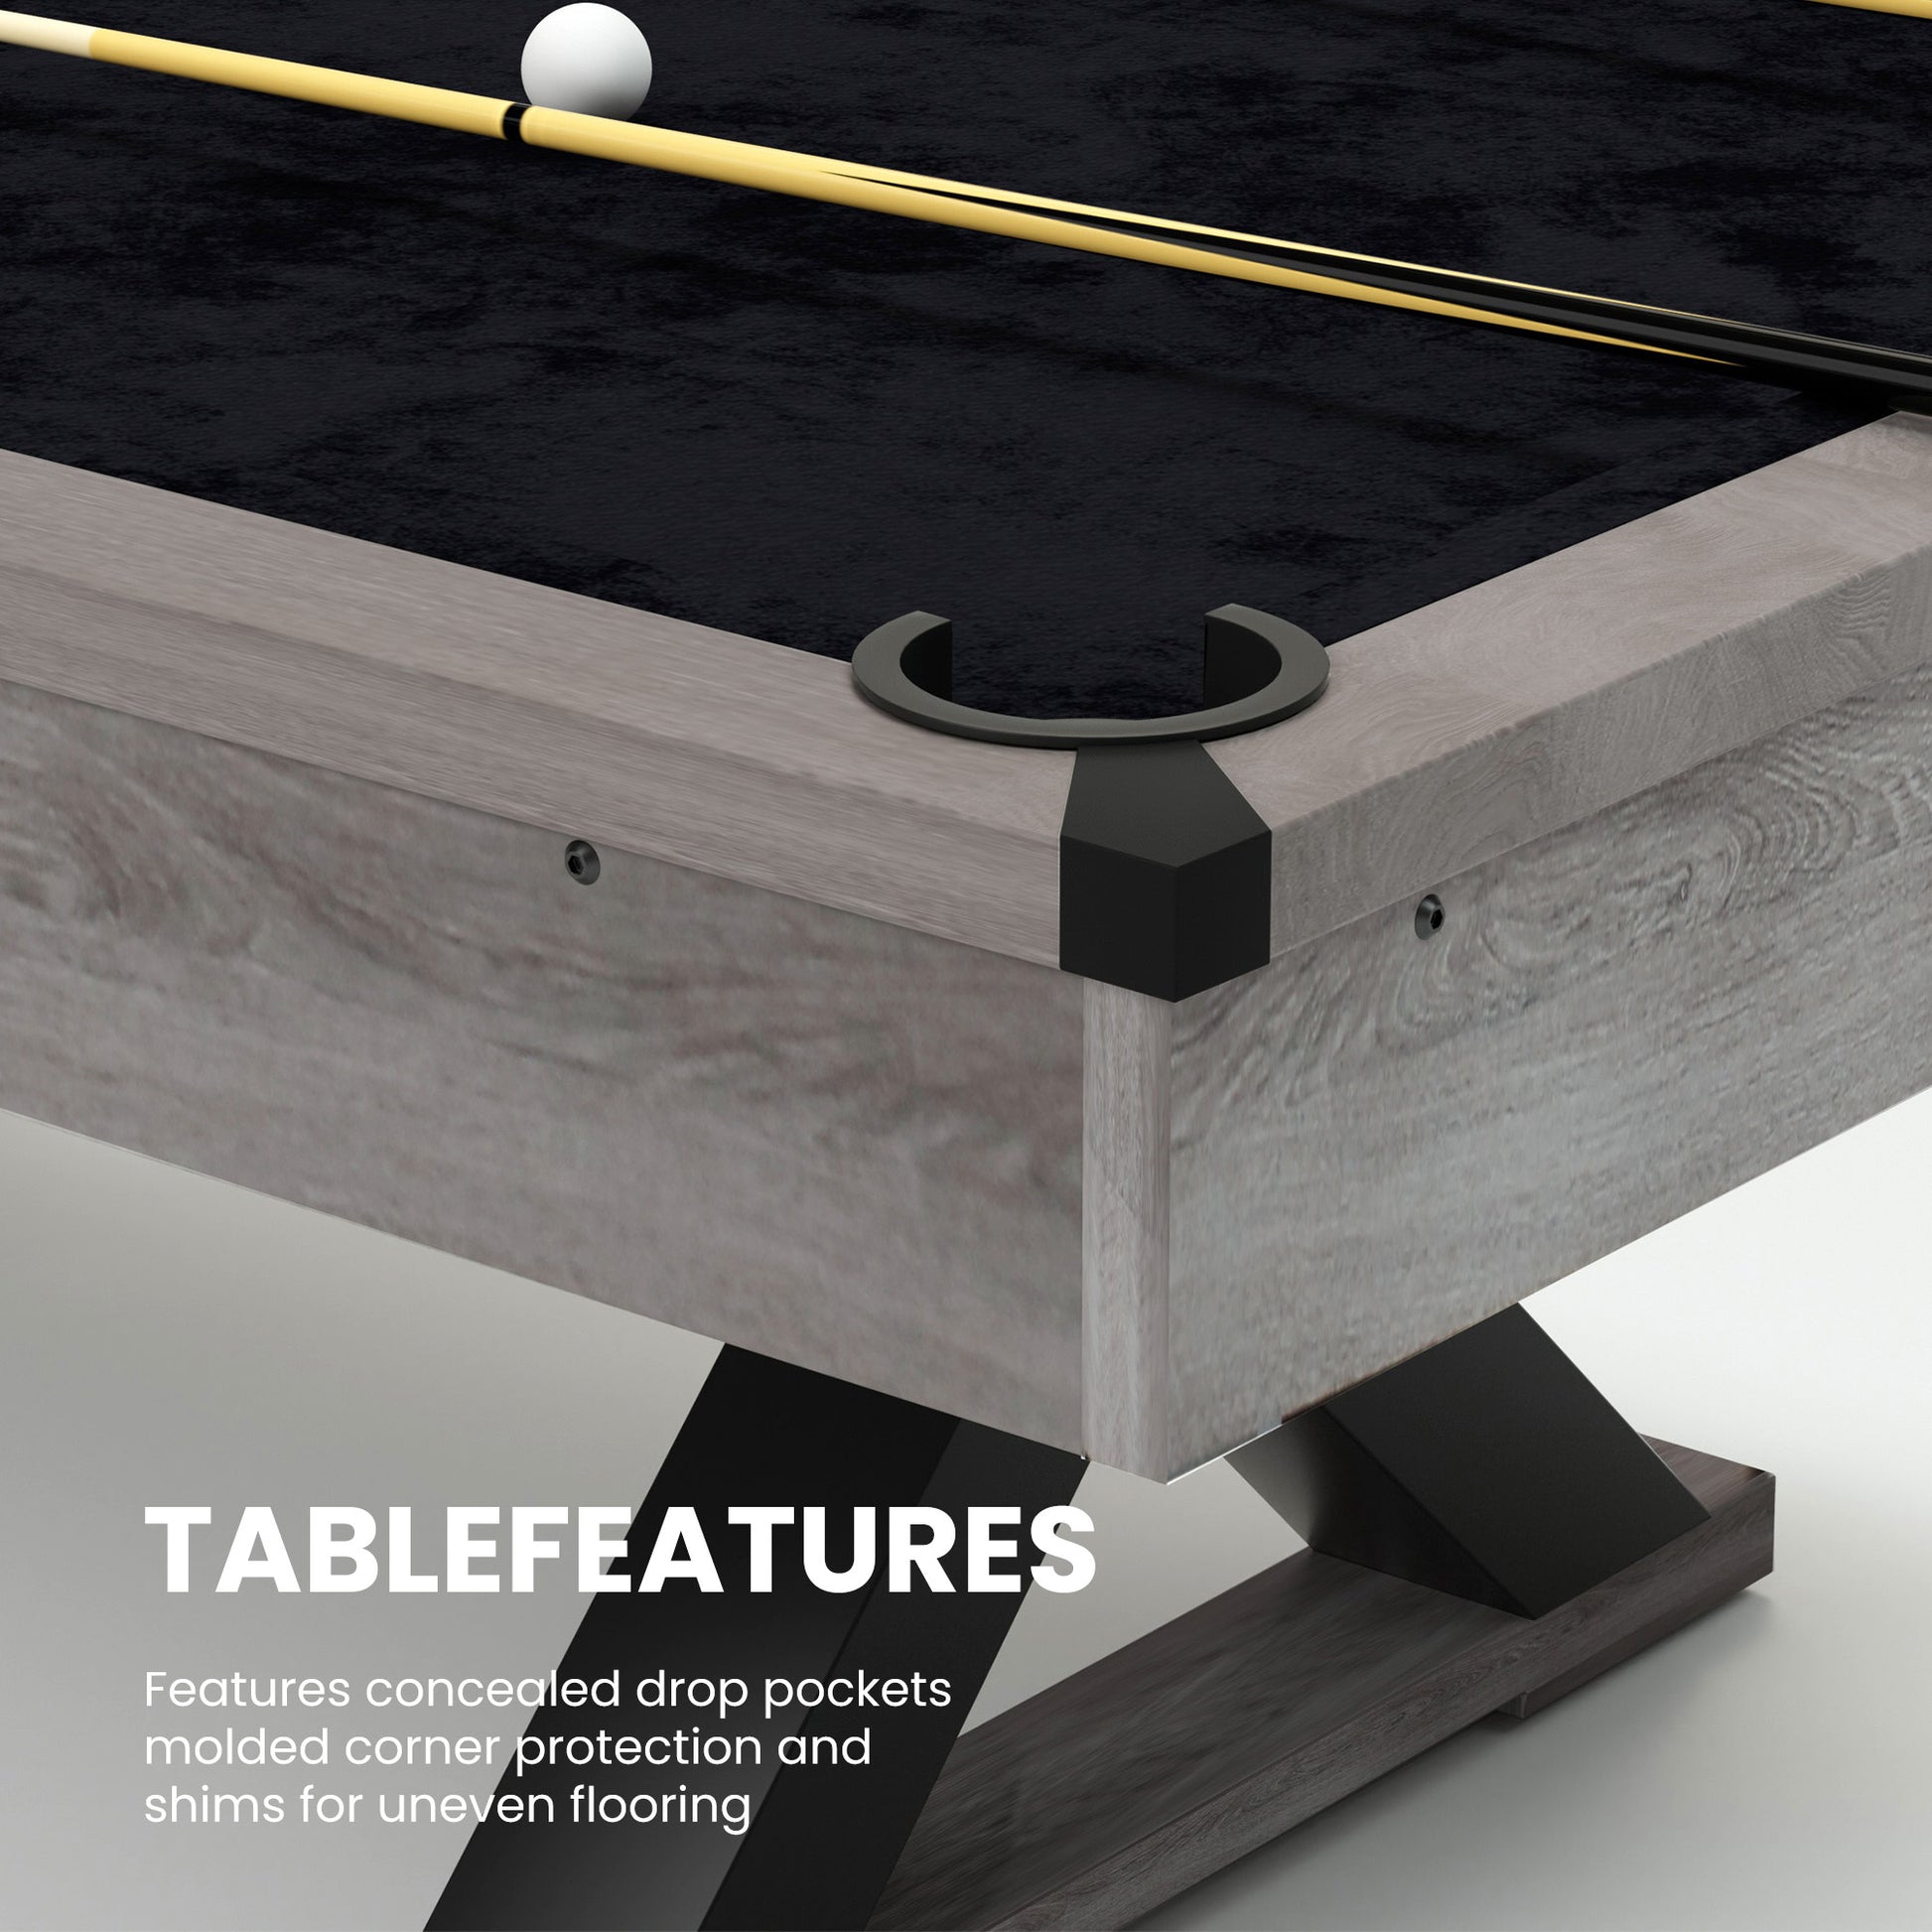 84" Pool Table With Billiard Balls, Cues, Pool